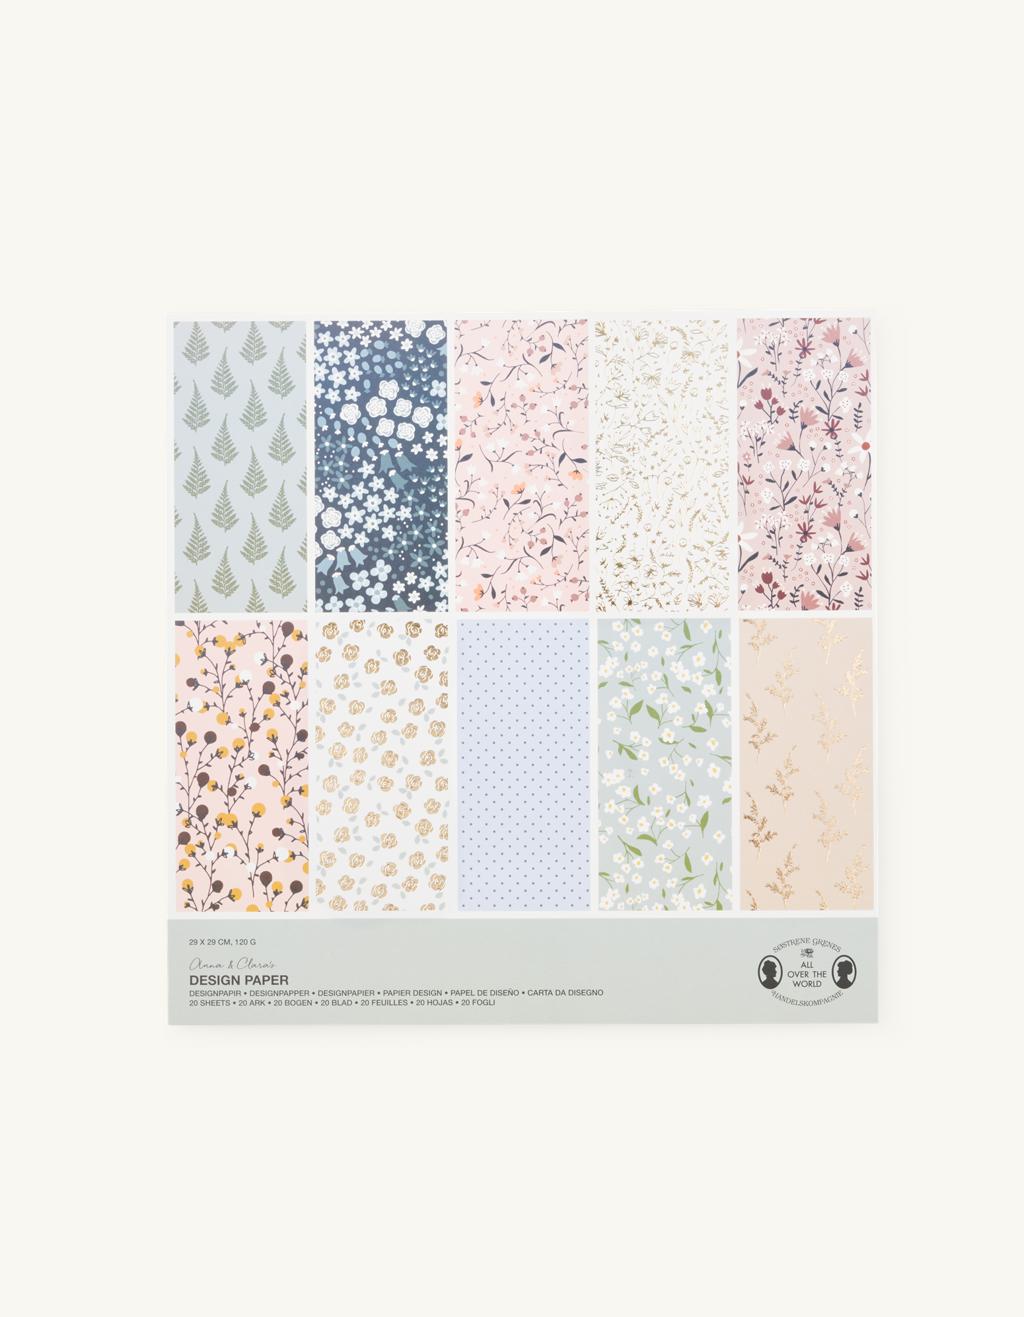 Design Paper | sheets | 10 designs | Søstrene Grene